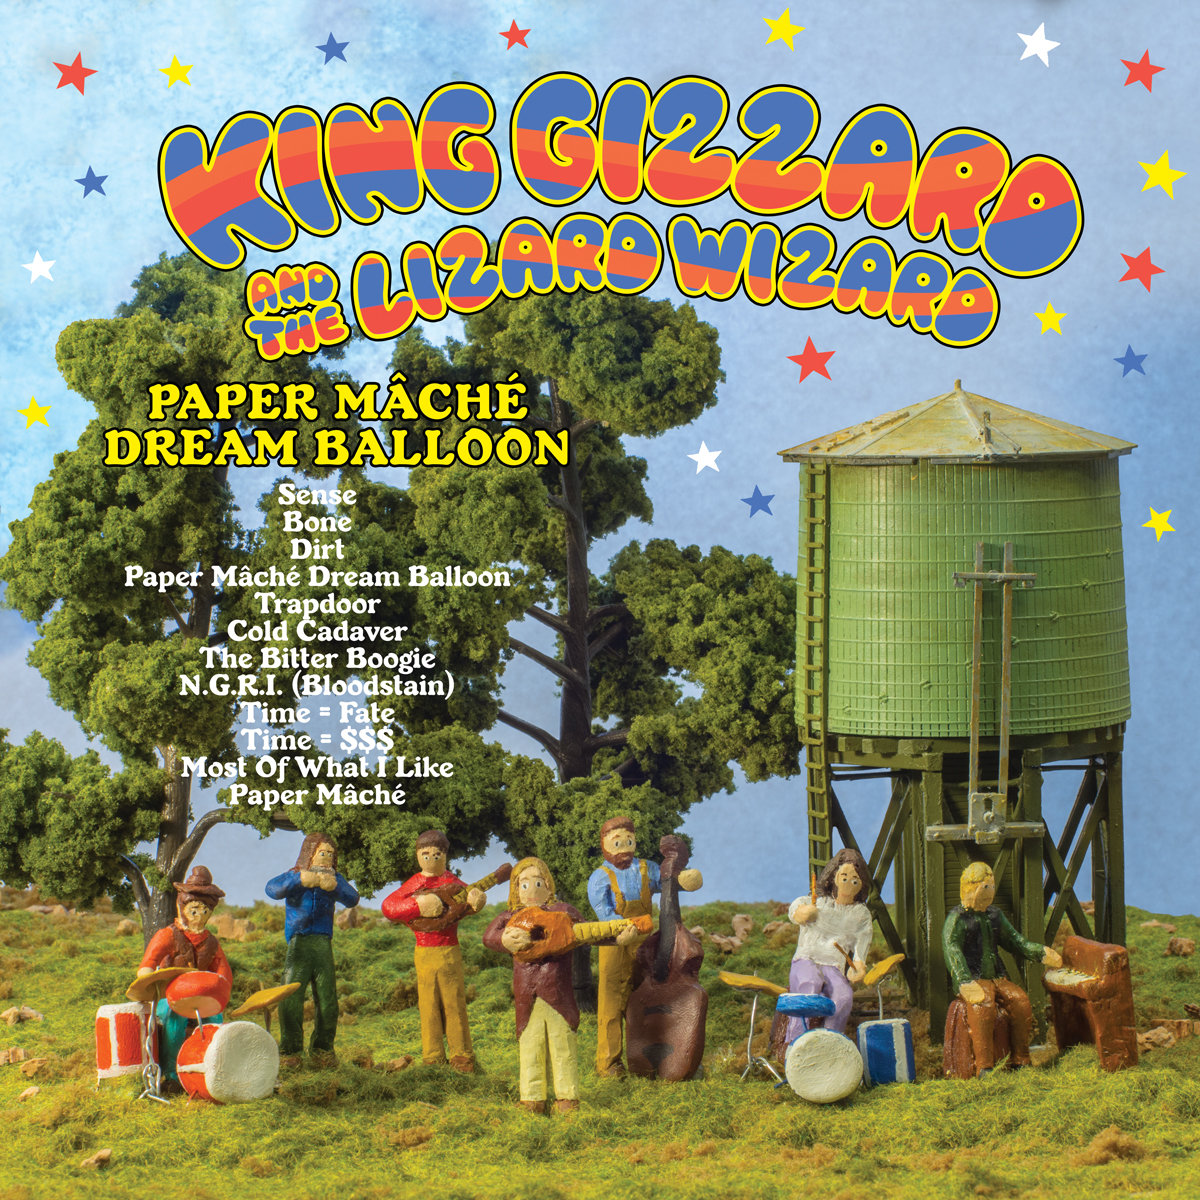 King Gizzard & The Lizard Wizard - Paper Mâché Dream Balloon cover